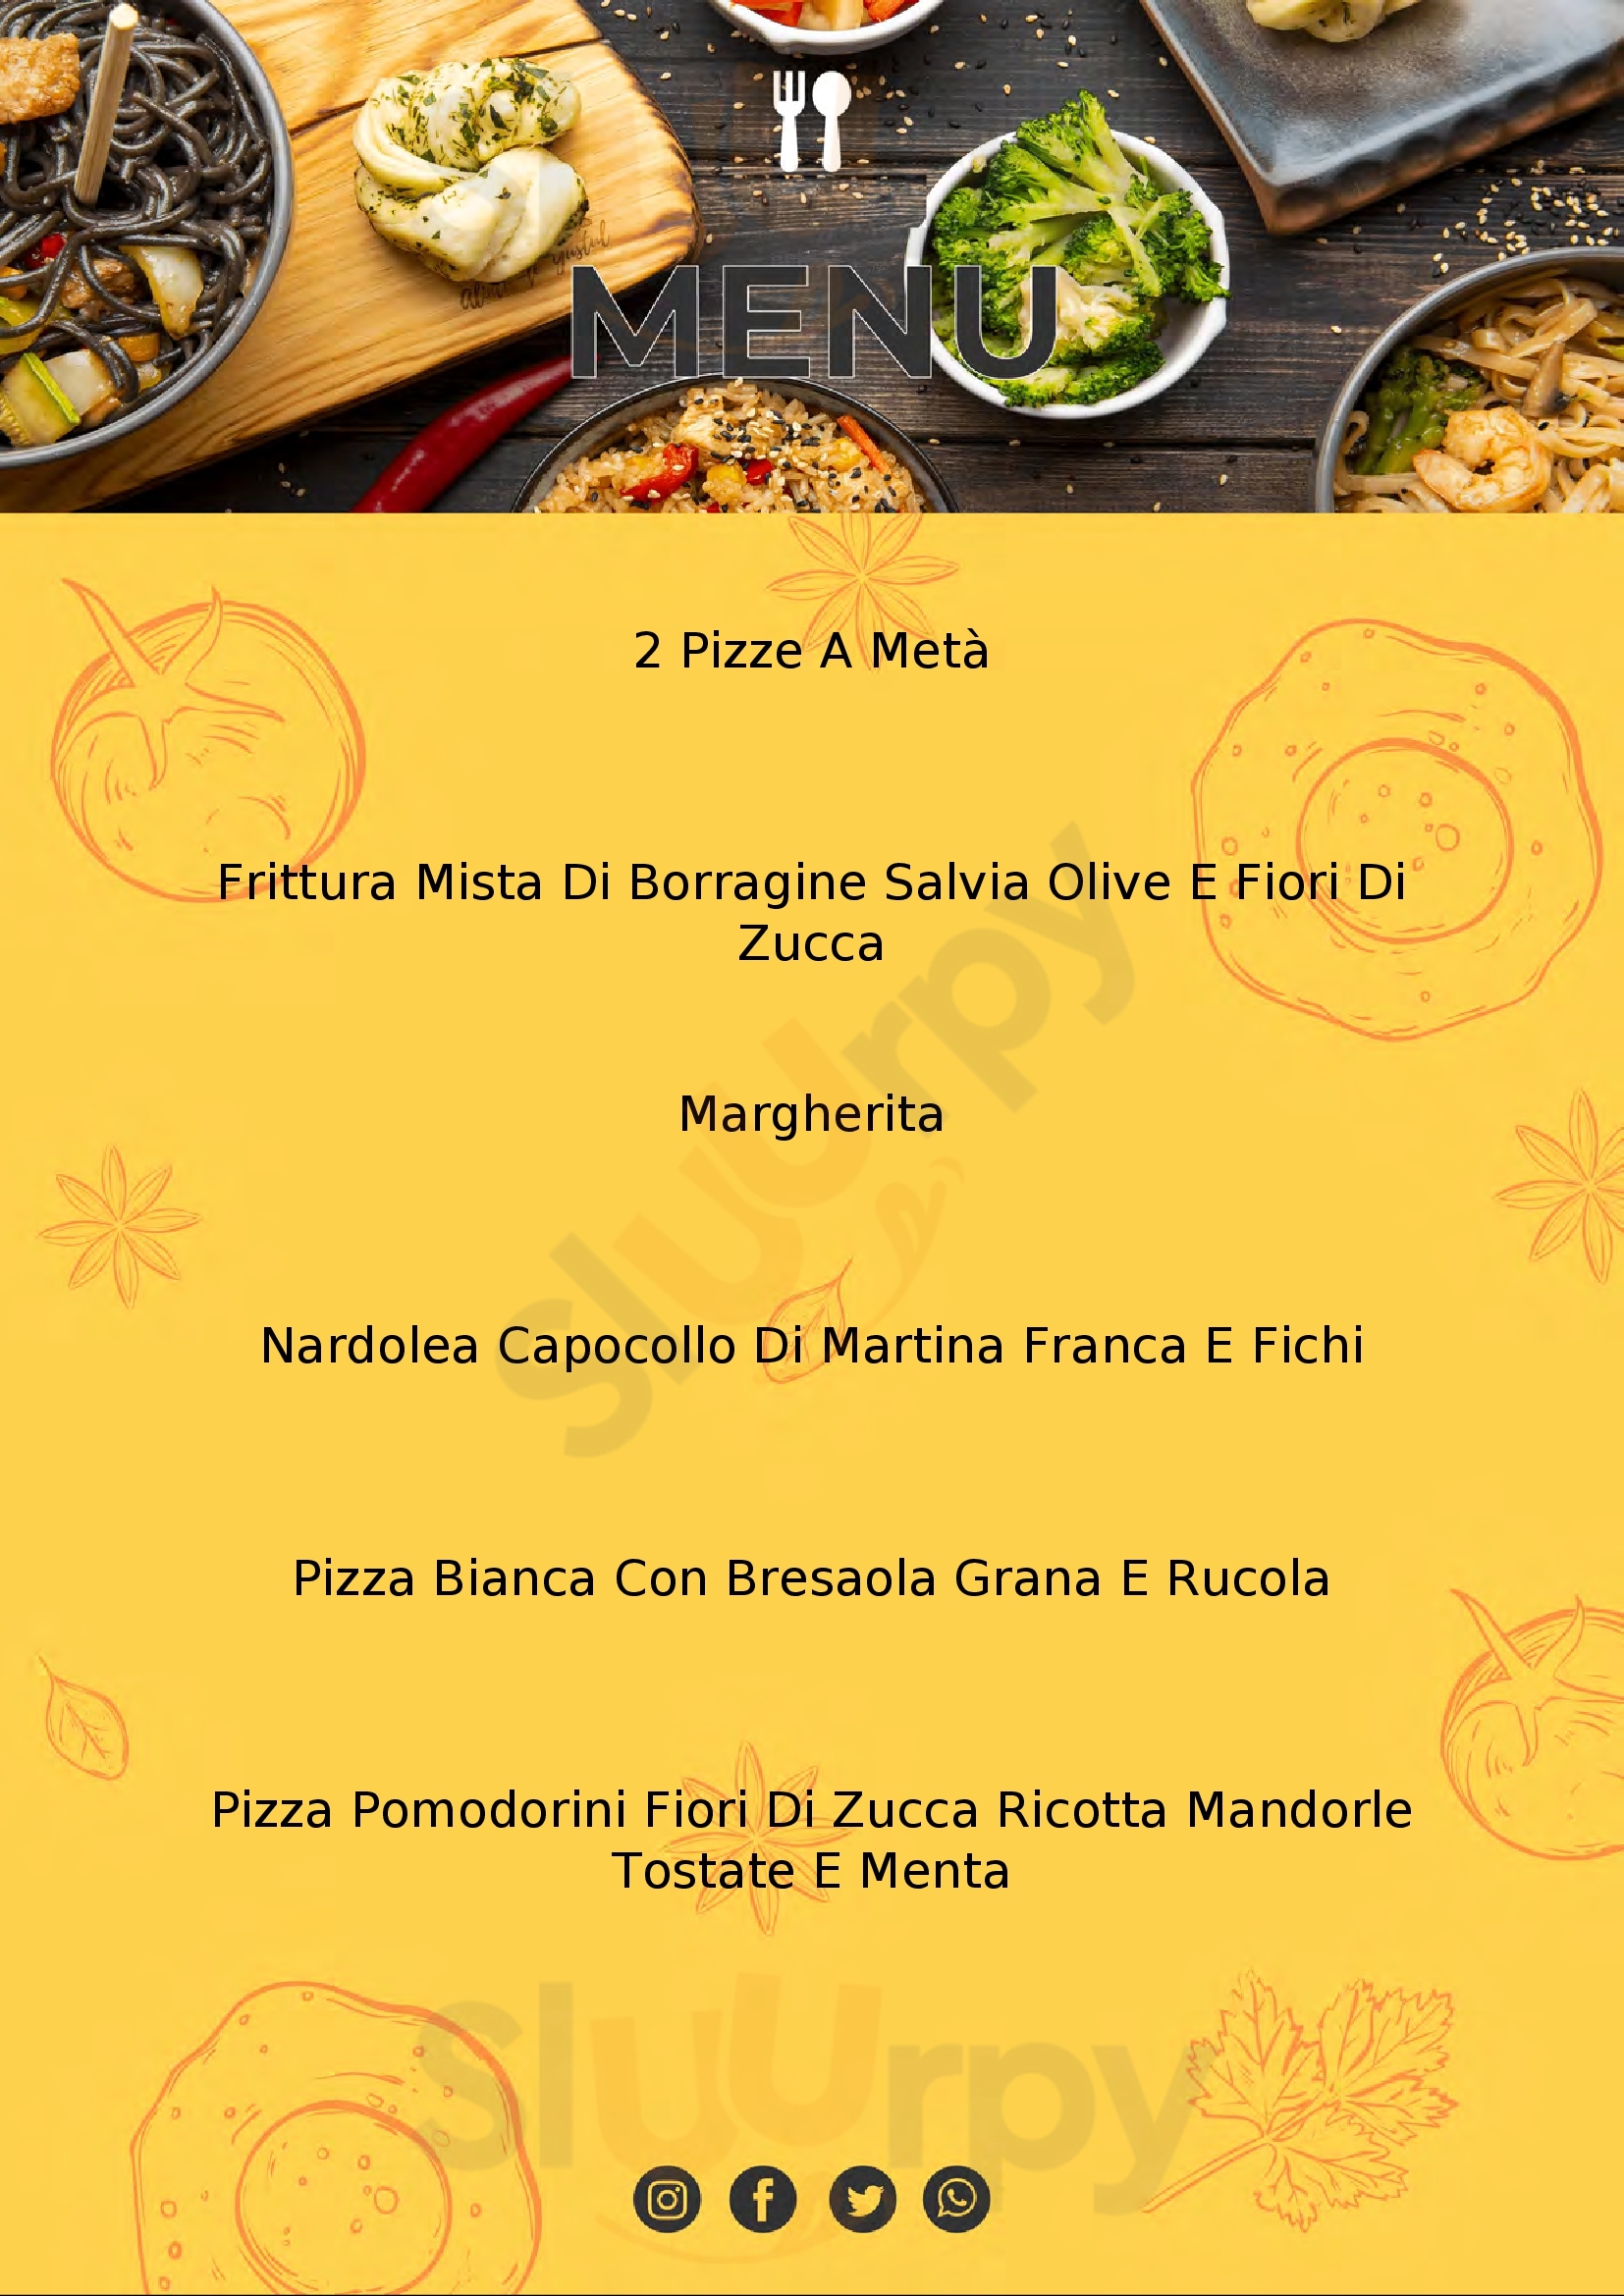 Fiscolo Pizzeria Mediterranea Ceglie Messapica menù 1 pagina